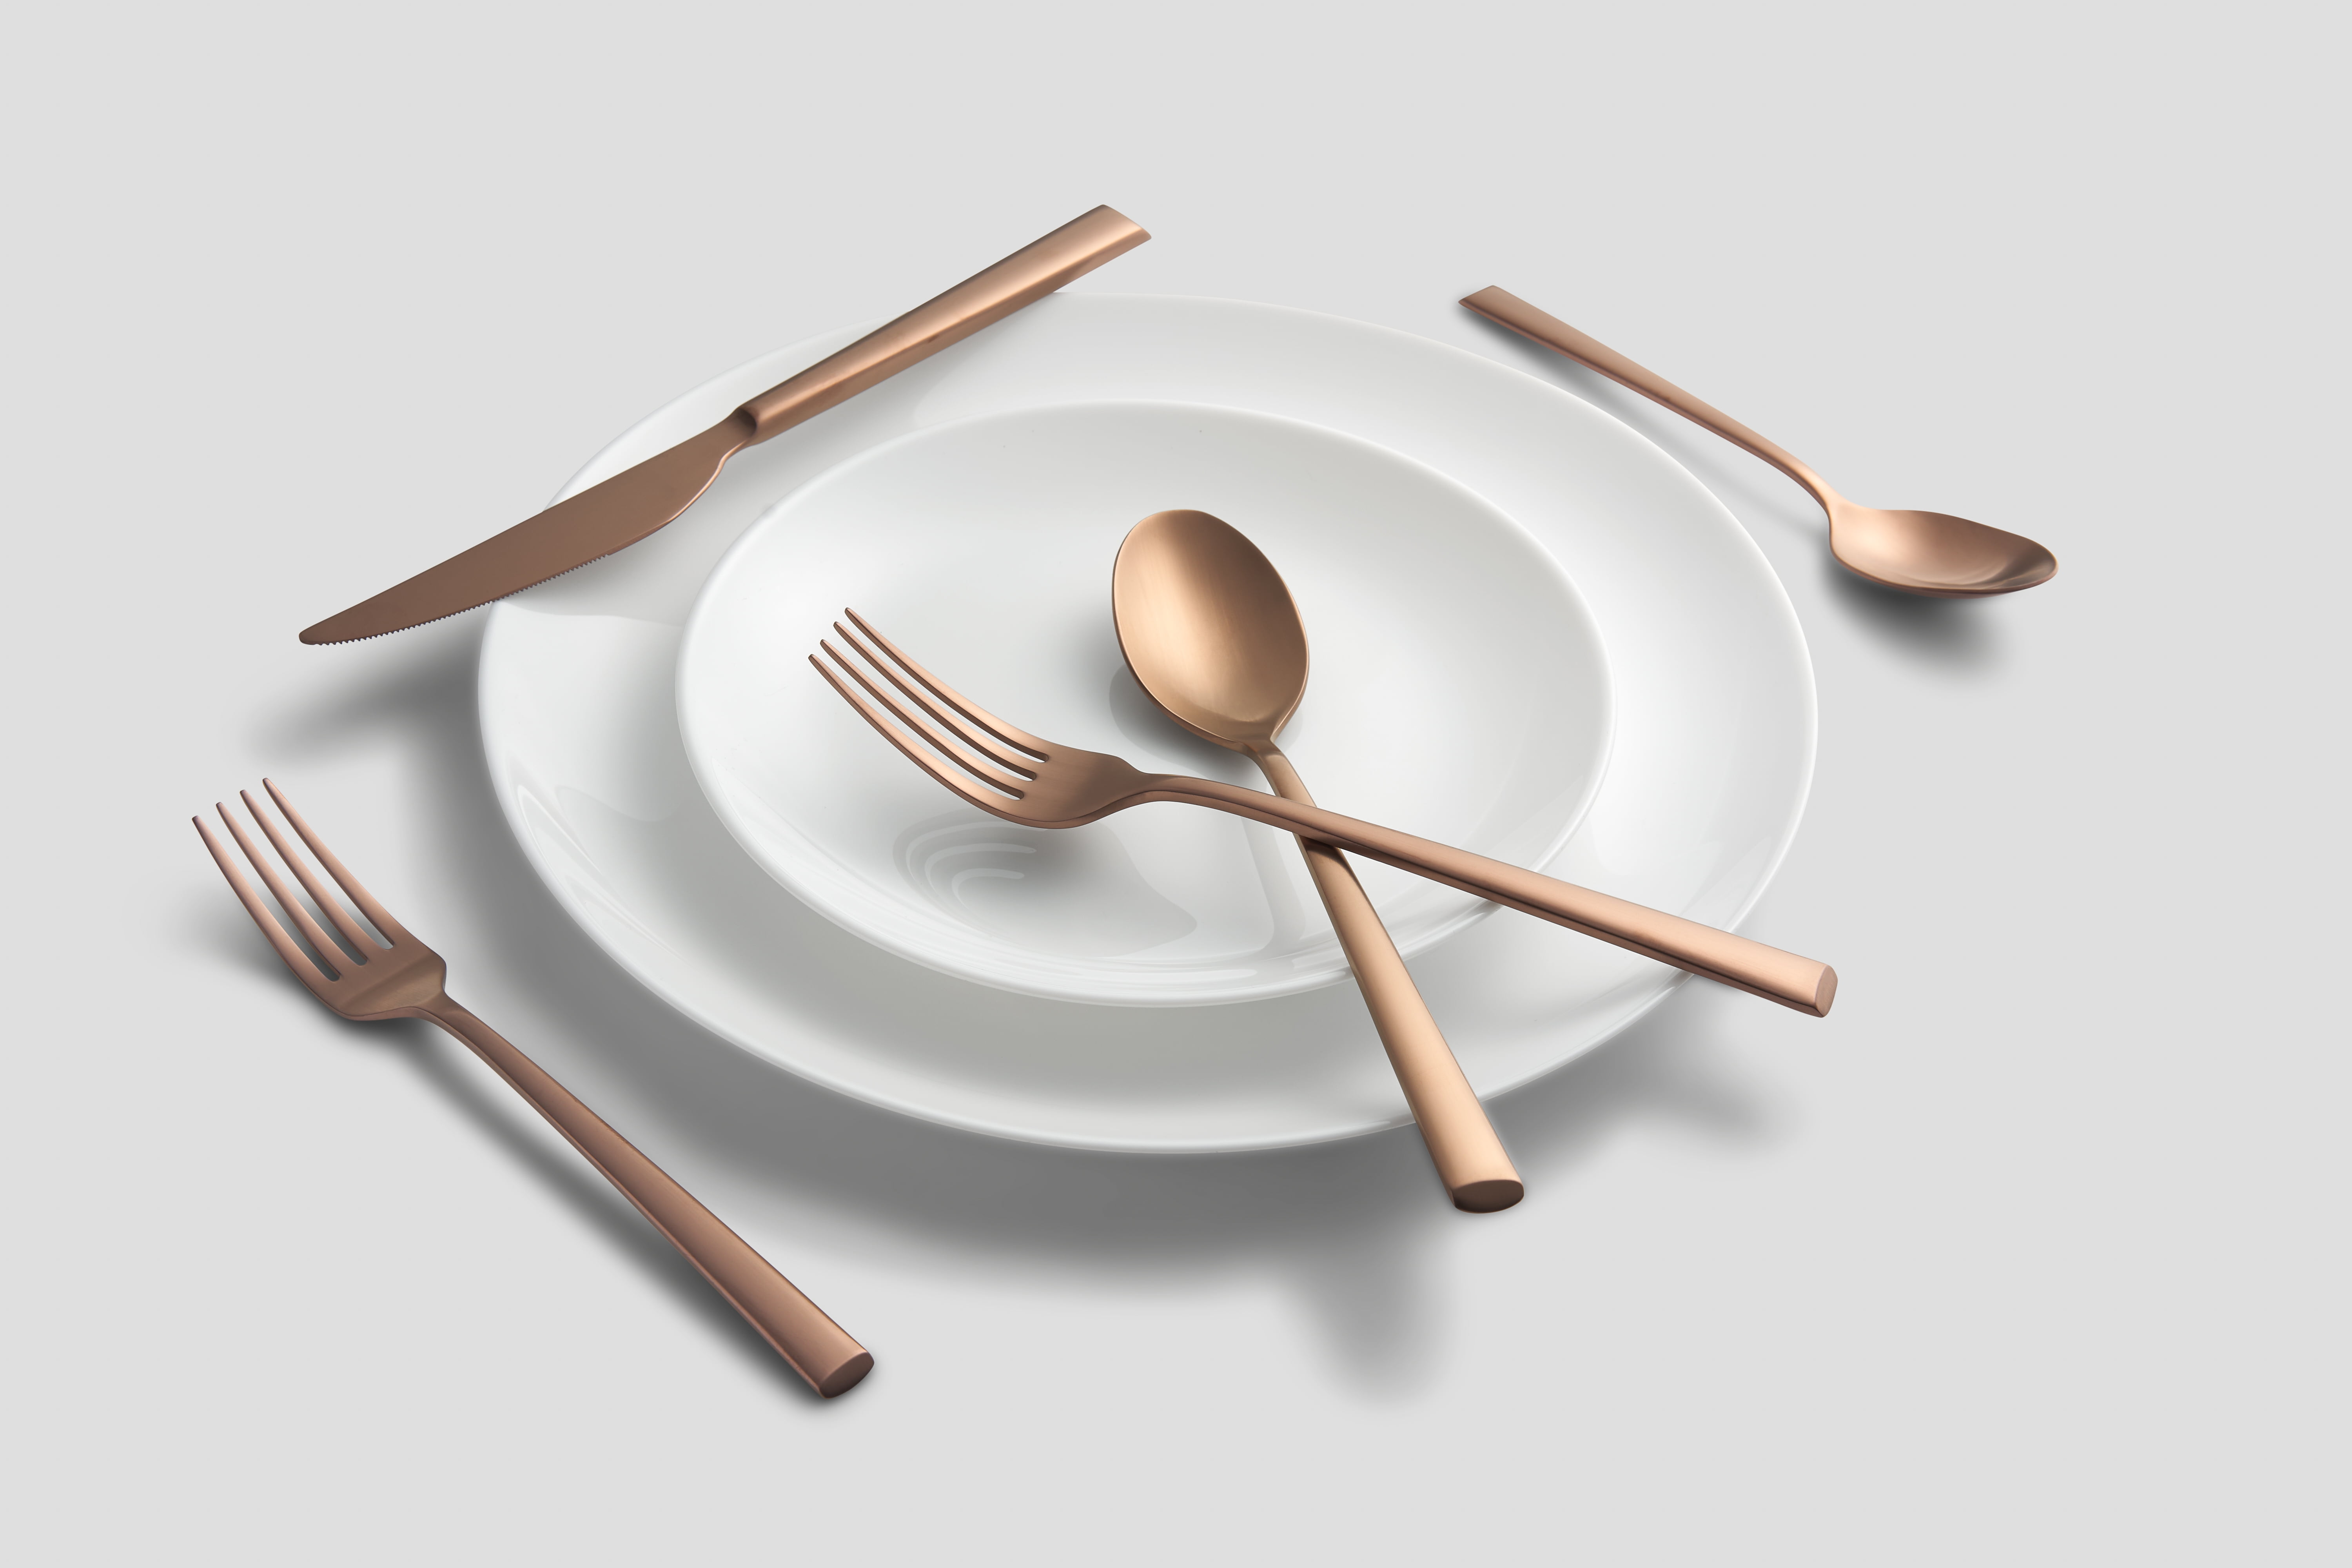 Copper Teaspoon & Tablespoon Set – Wheelis Forge